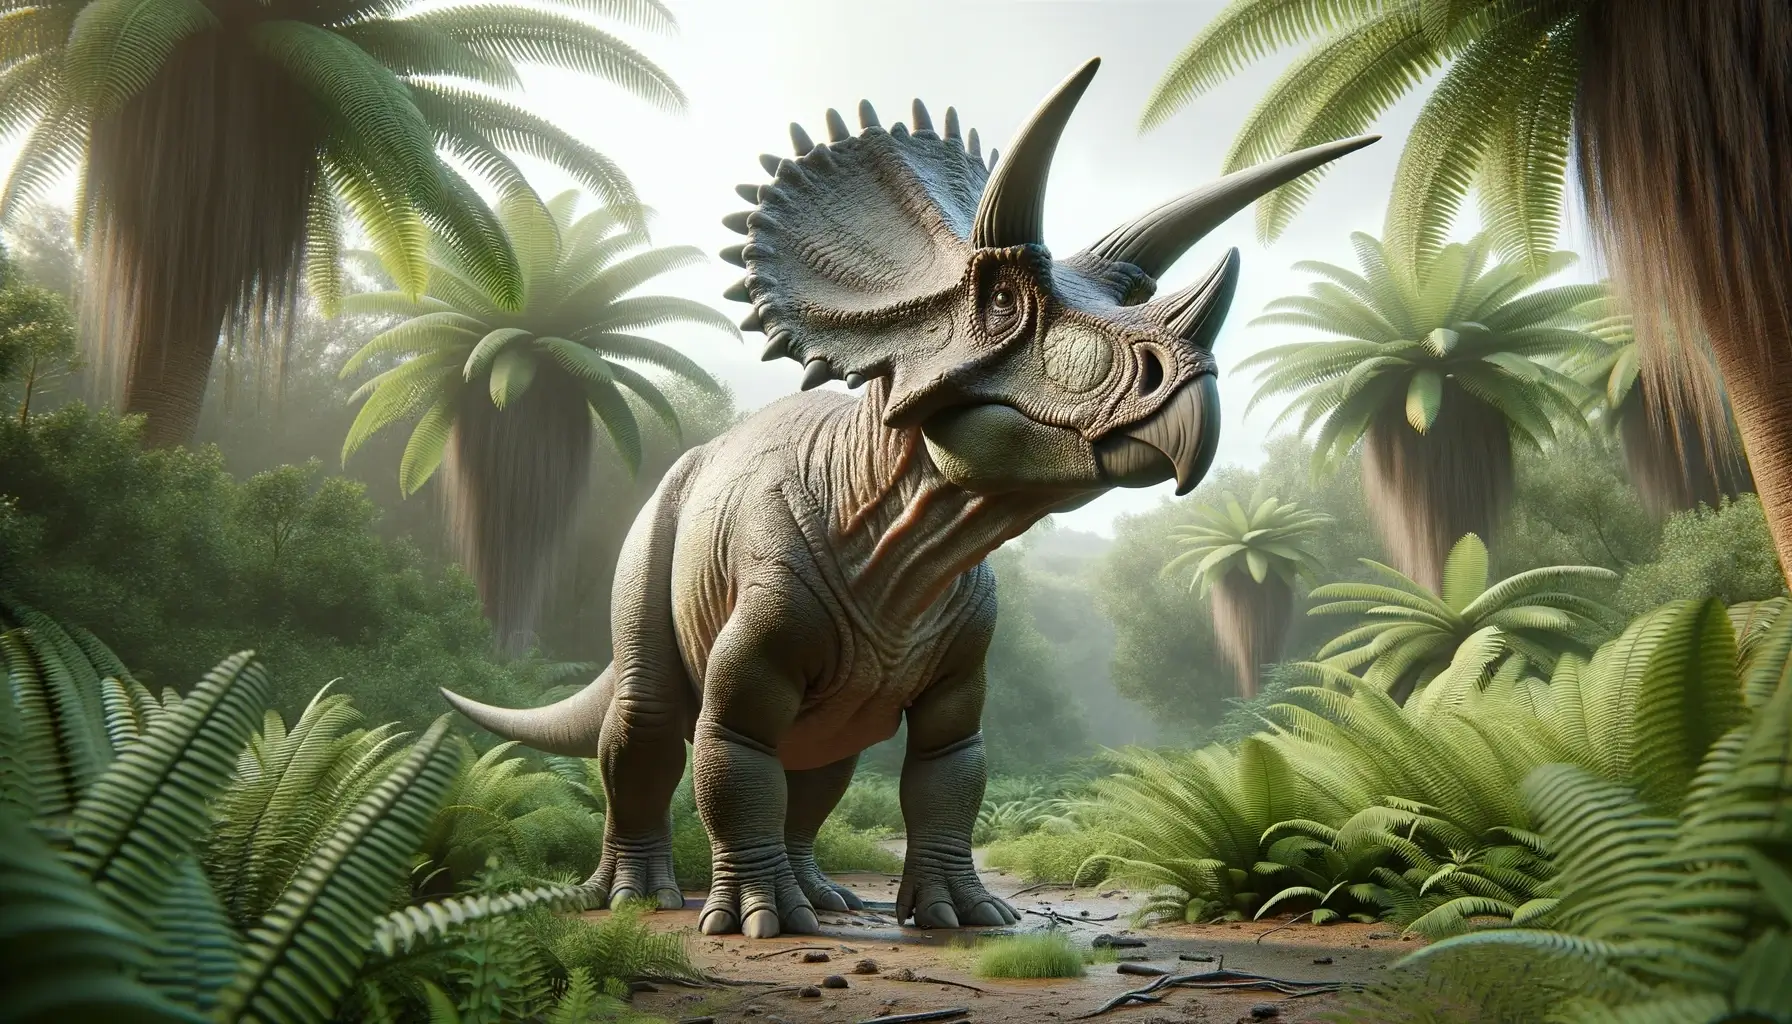 Realistic 3D render of Arrhinoceratops in Late Cretaceous habitat.